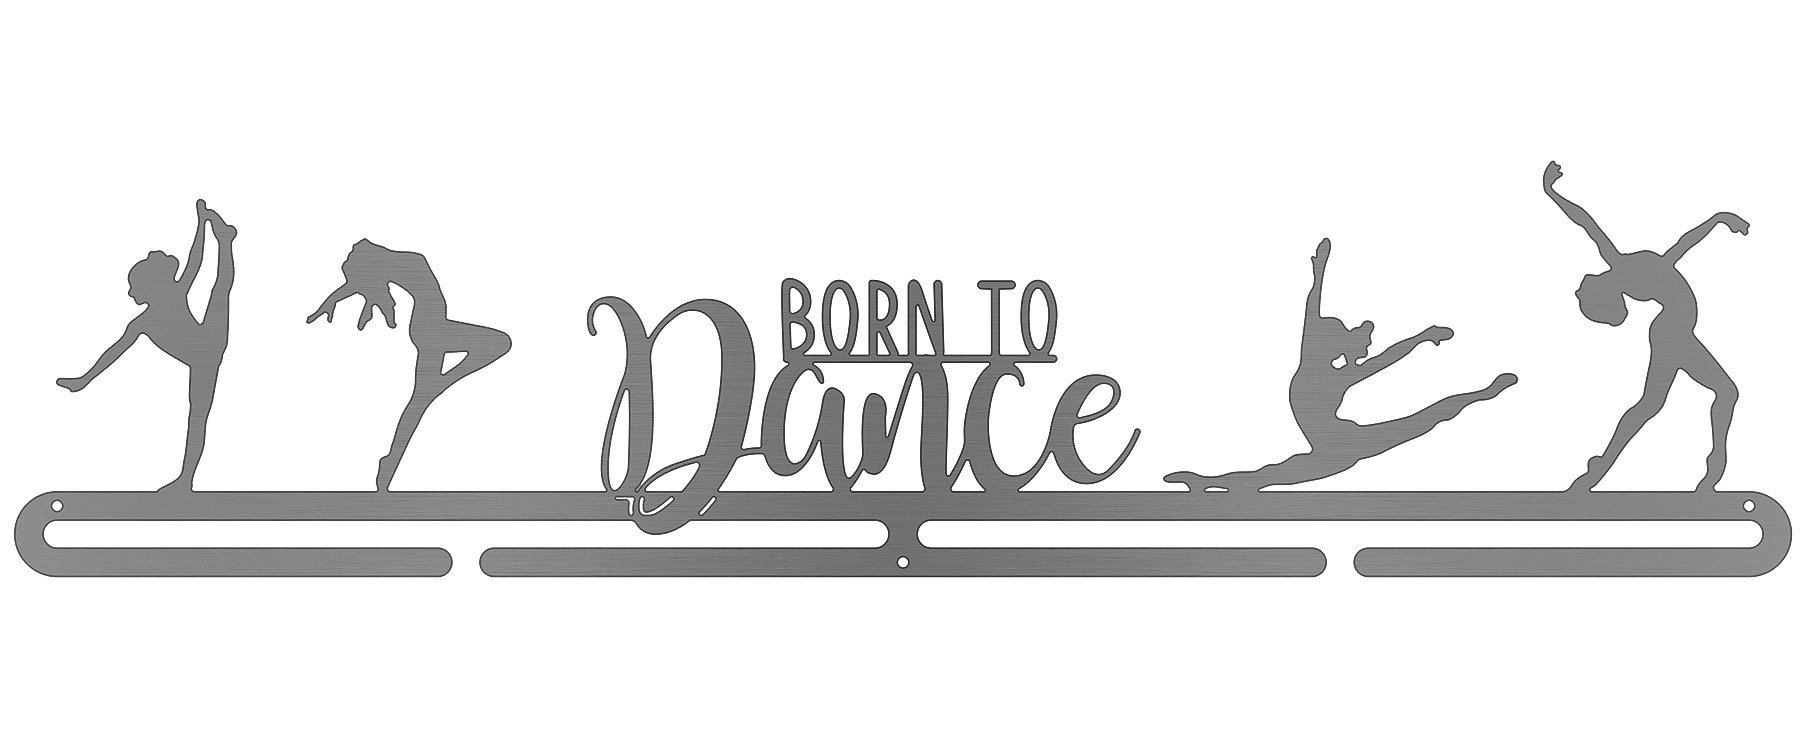 Born To Dance